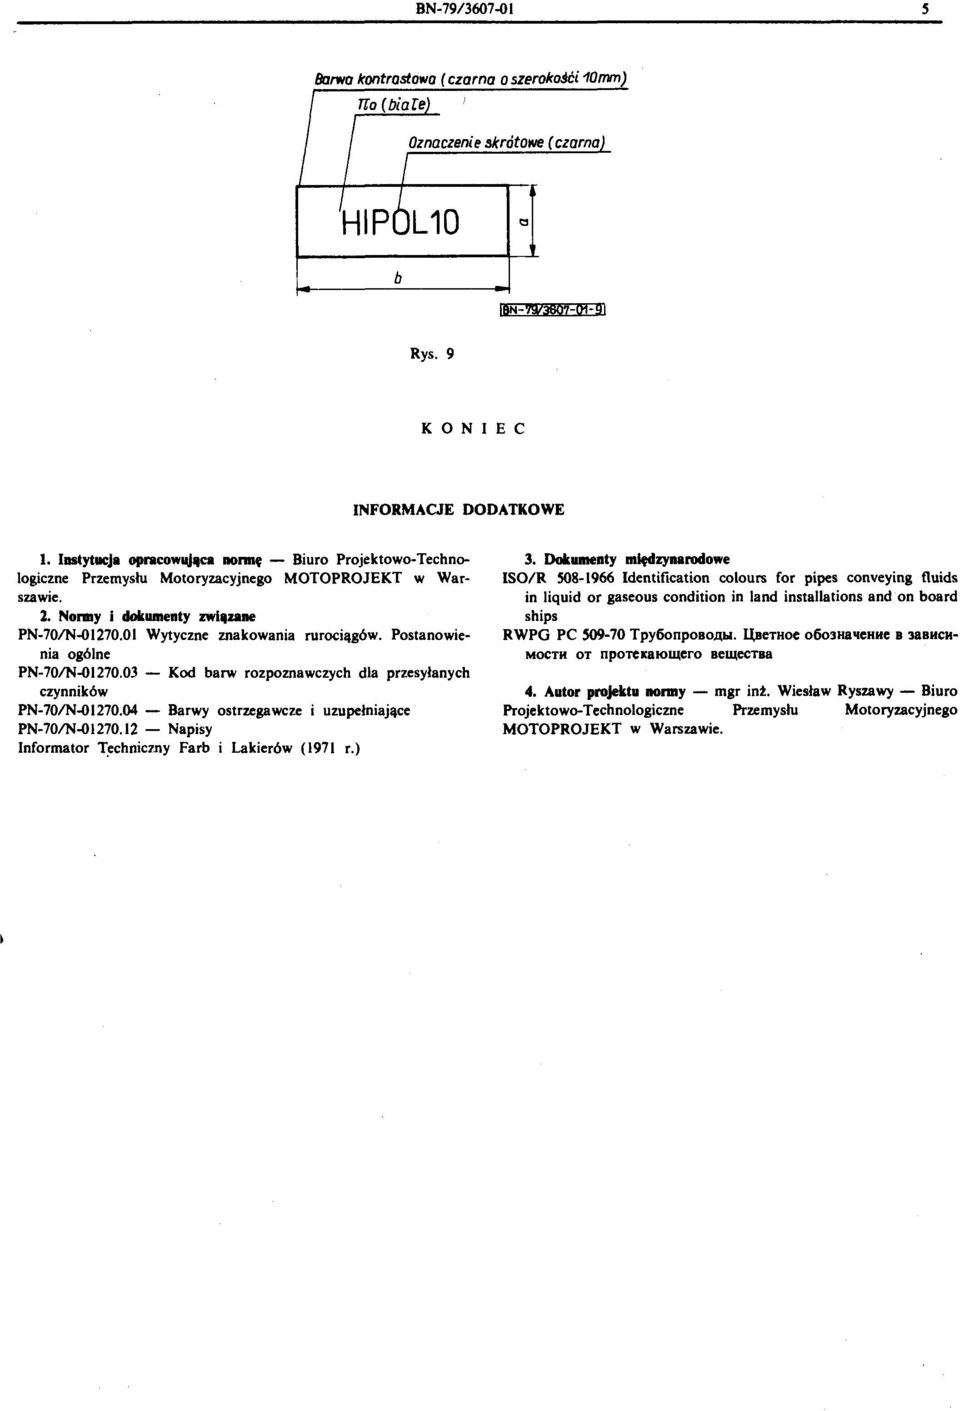 1 Napisy Informator T.echnic1l1y Far i Lakierów (1971 r.).